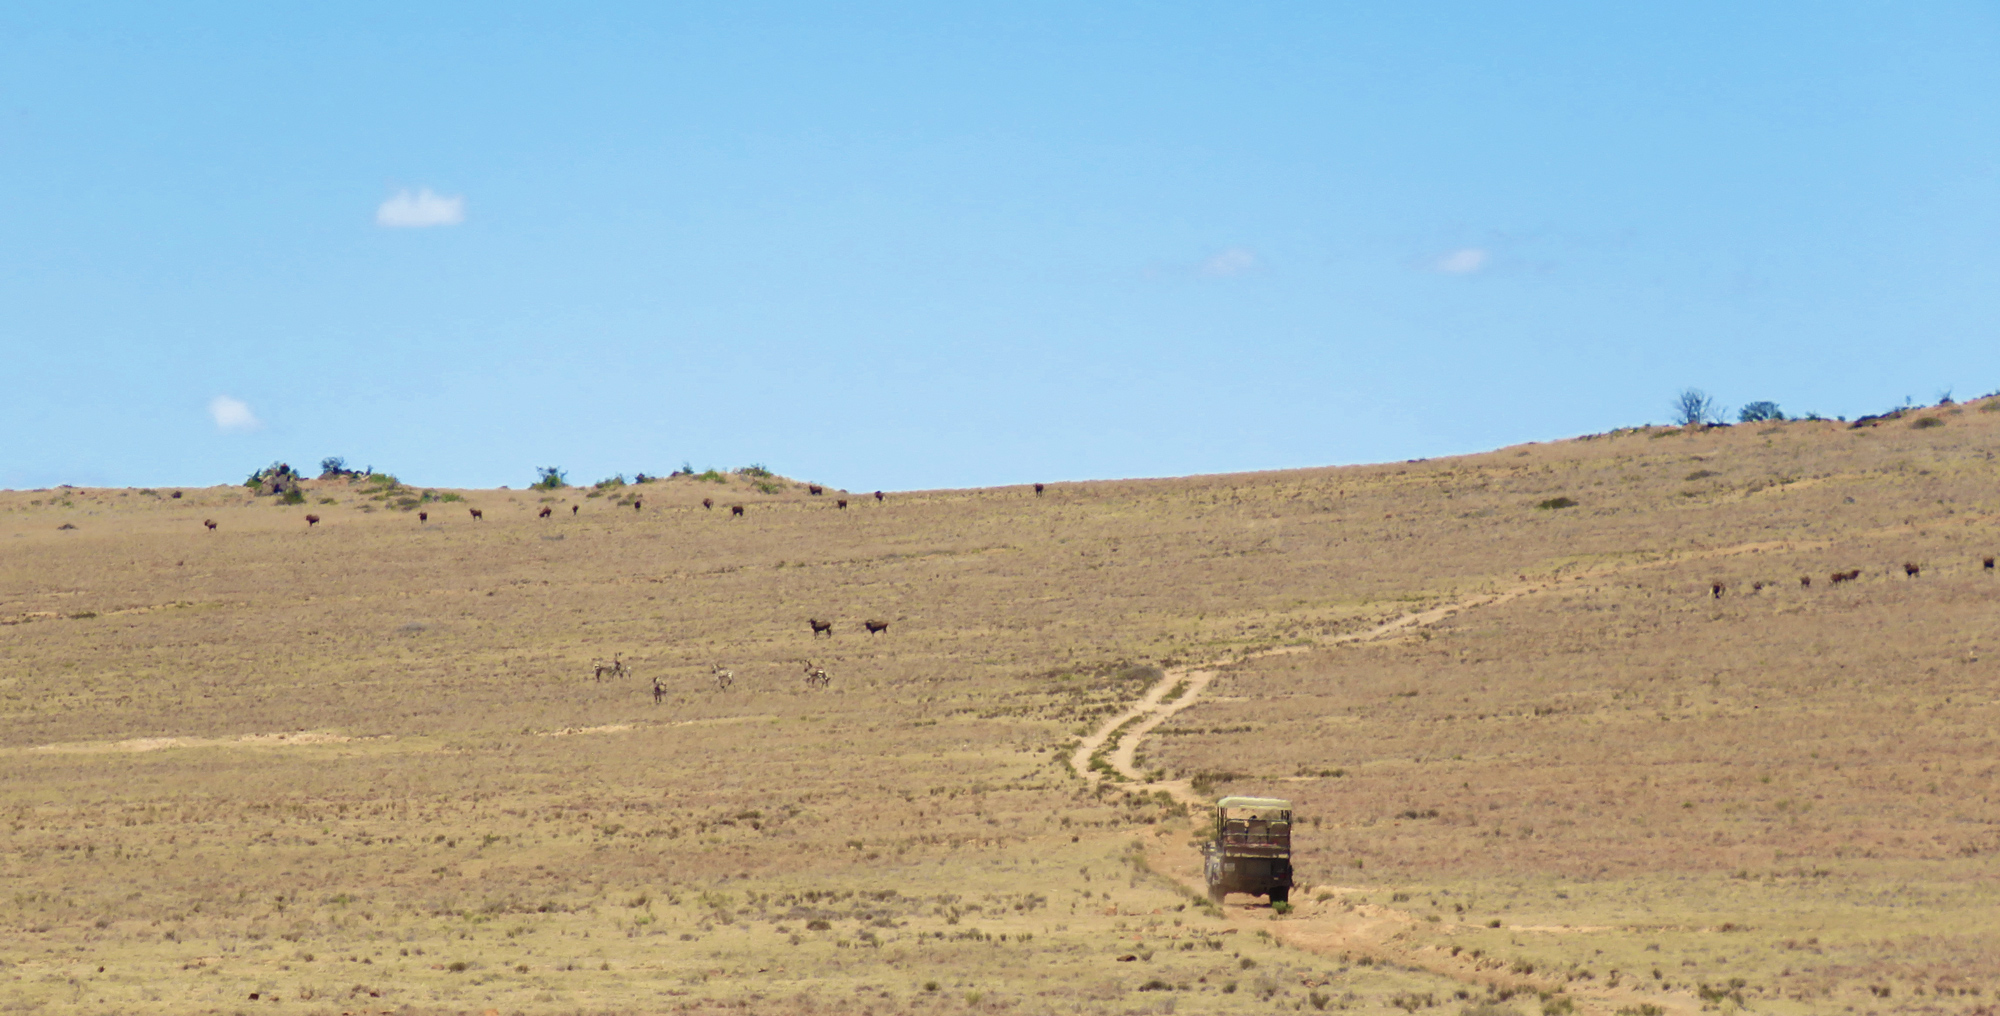 Samara's 'Samara Mara' with 360 degree views of the Great Karoo landscape